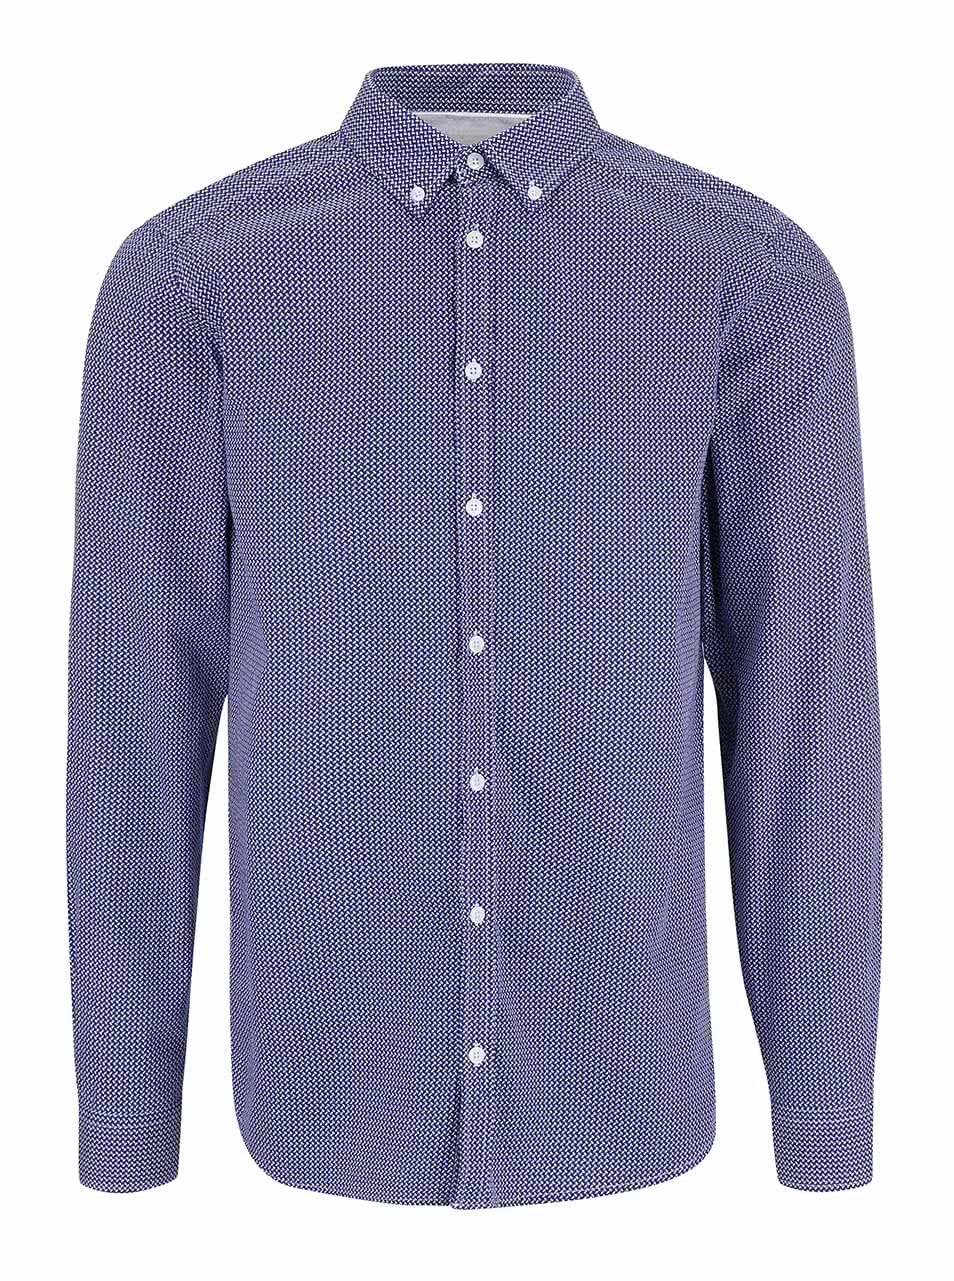 Modrá košile s jemným vzorem Tailored & Originals Ramsey